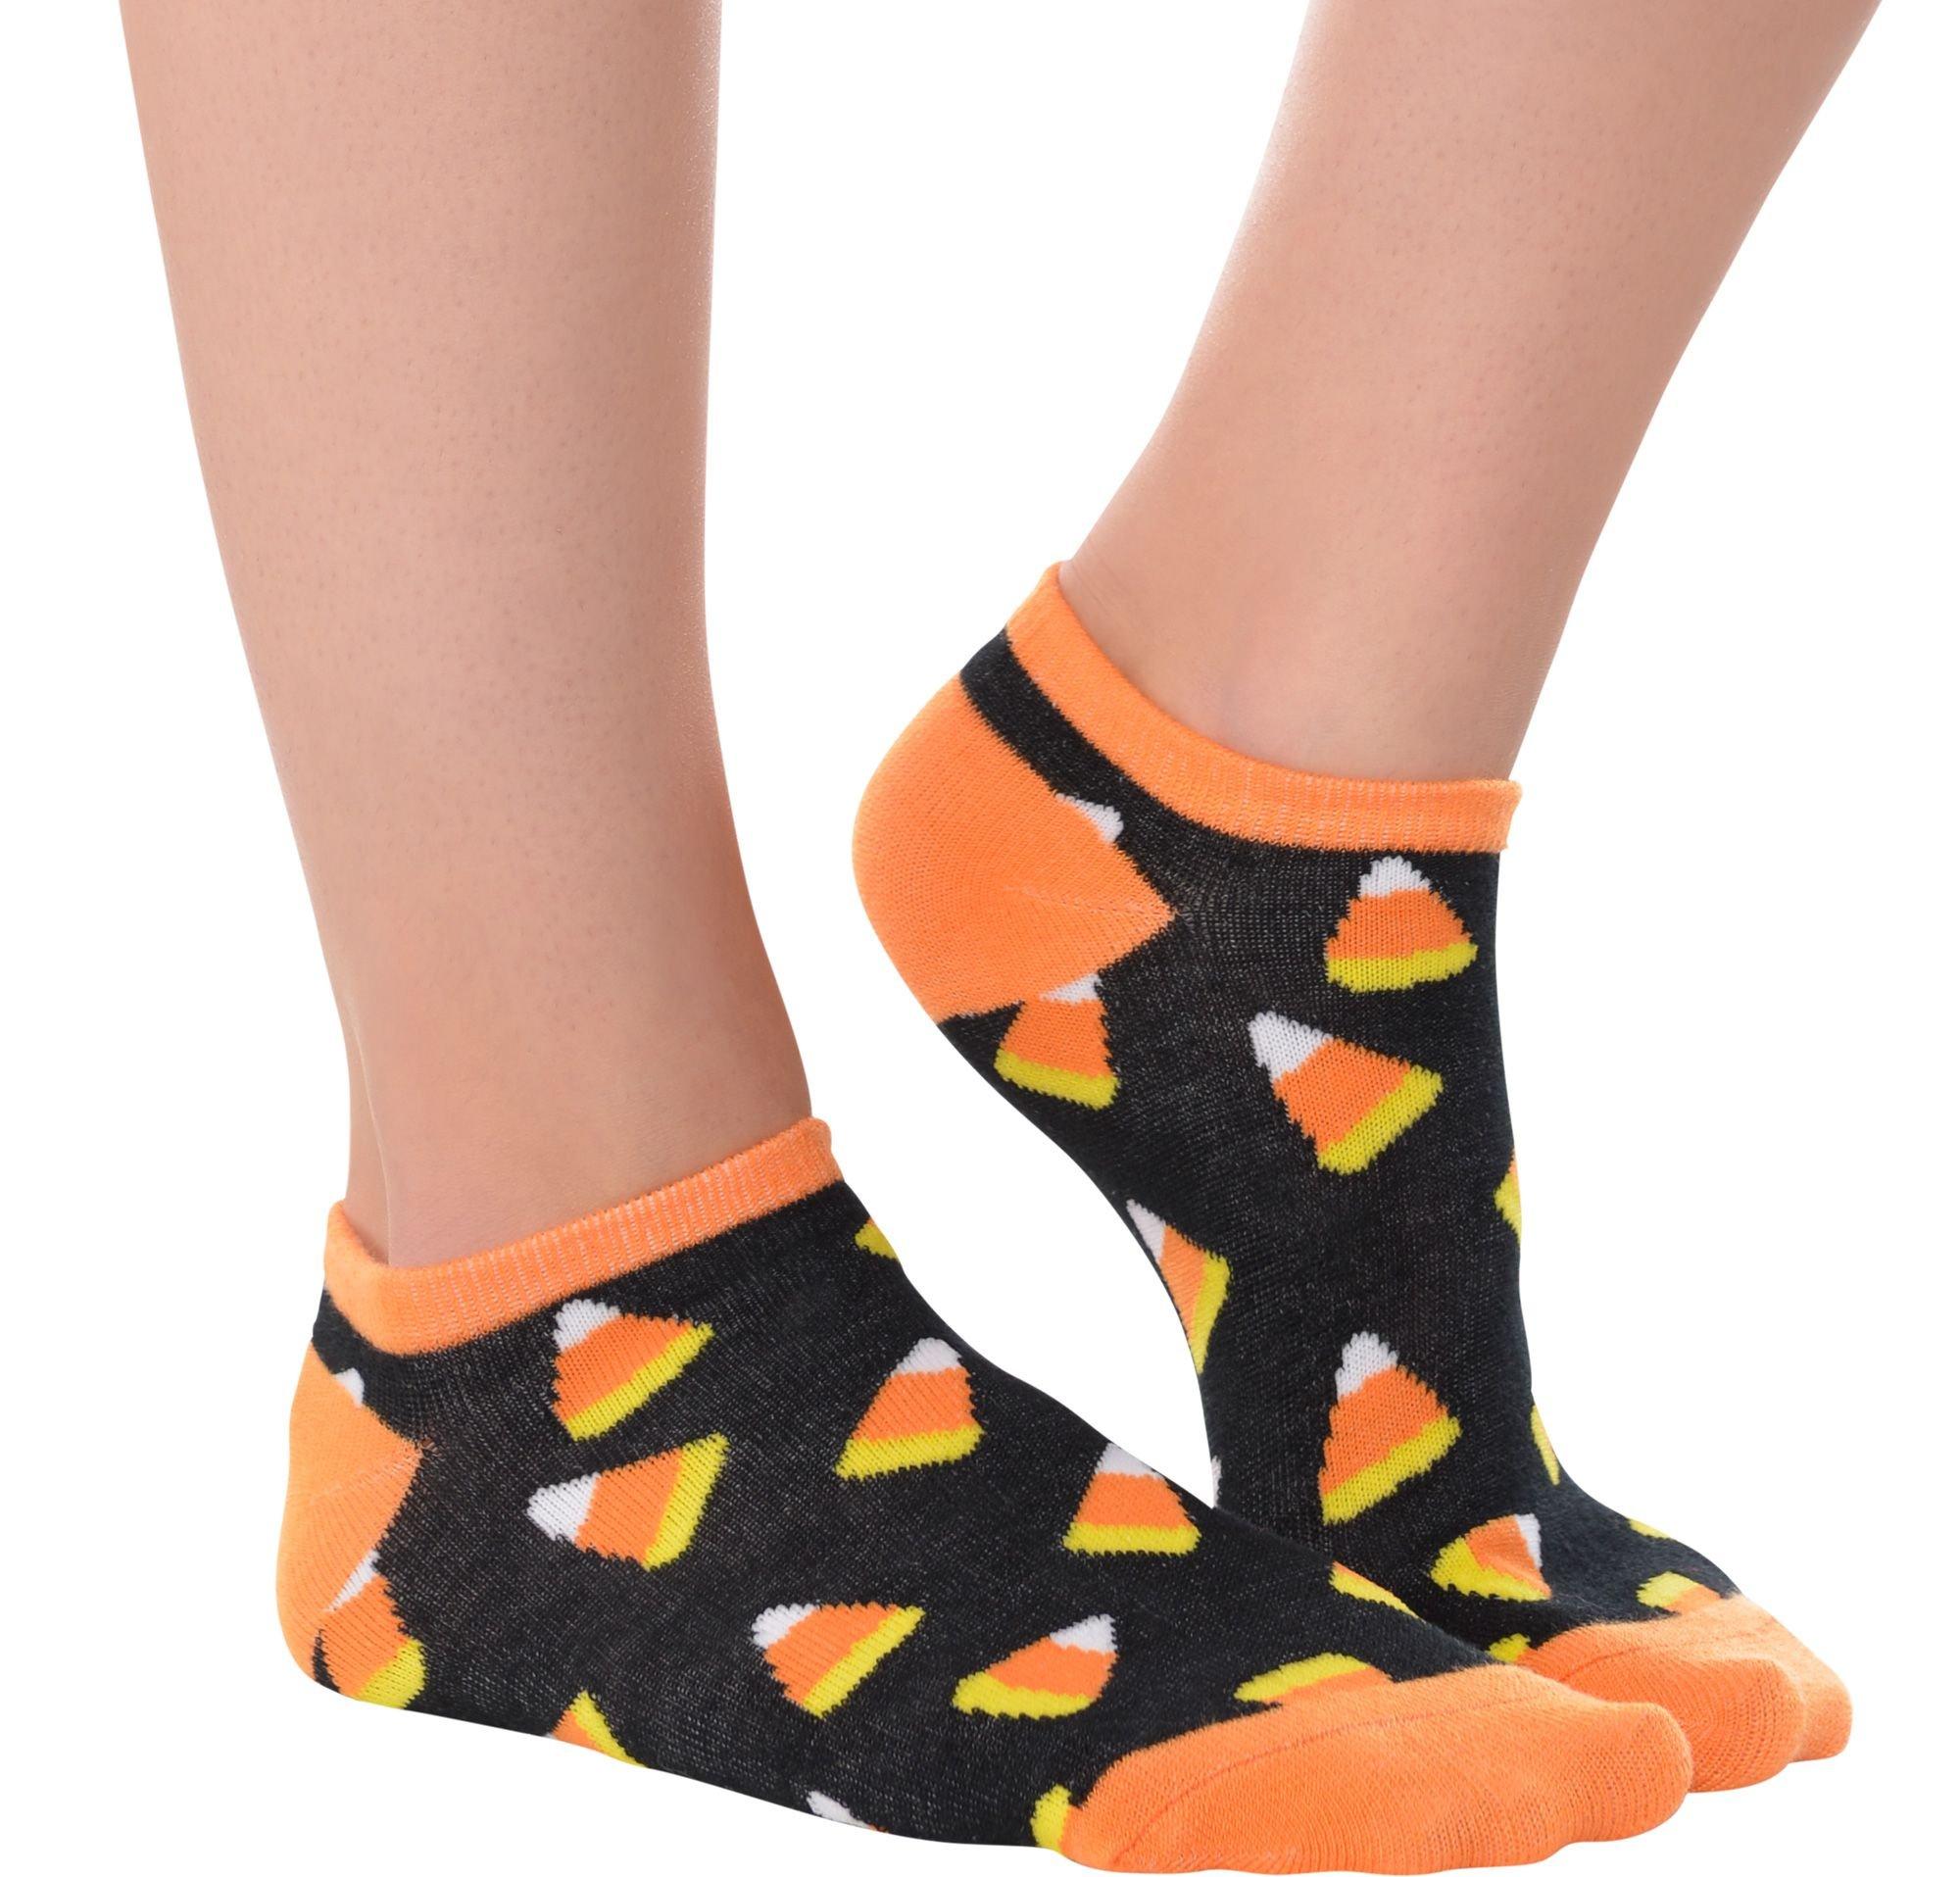 Personalized Candy Corn Halloween Socks